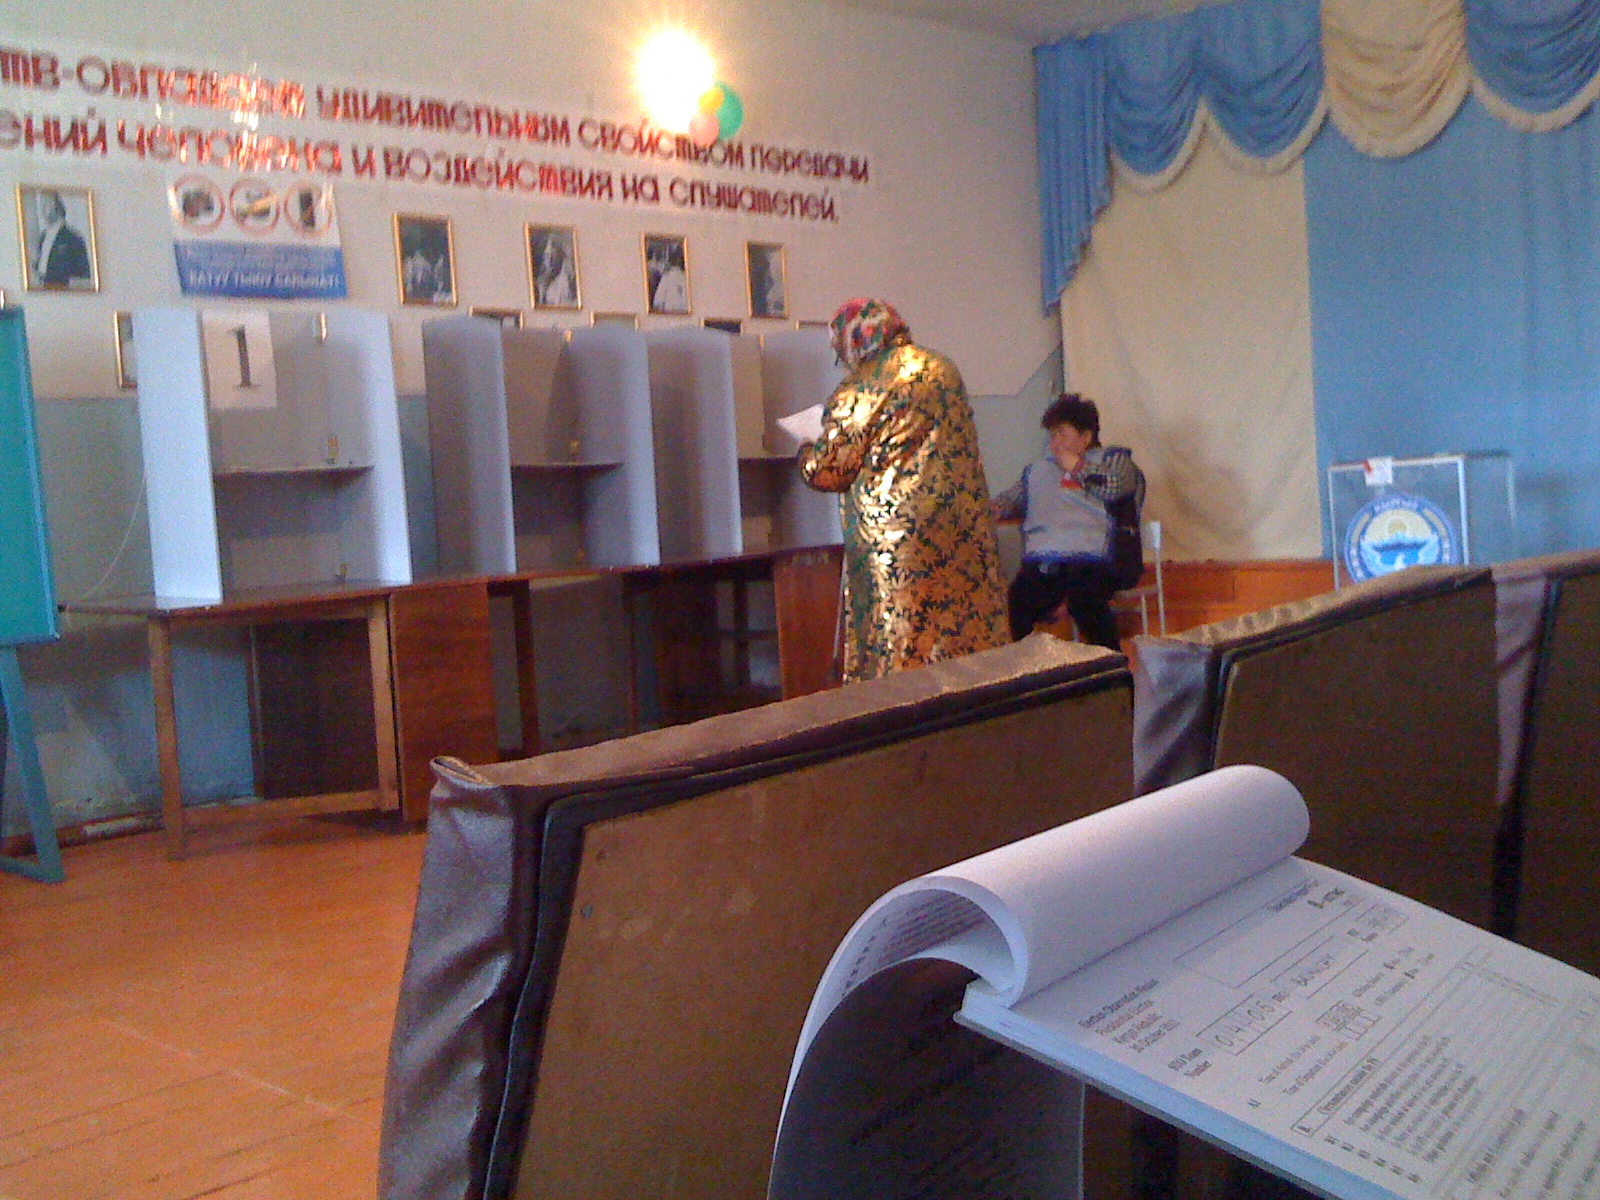 Polling place, rural polling station near Balichky, Kyrgyzstan